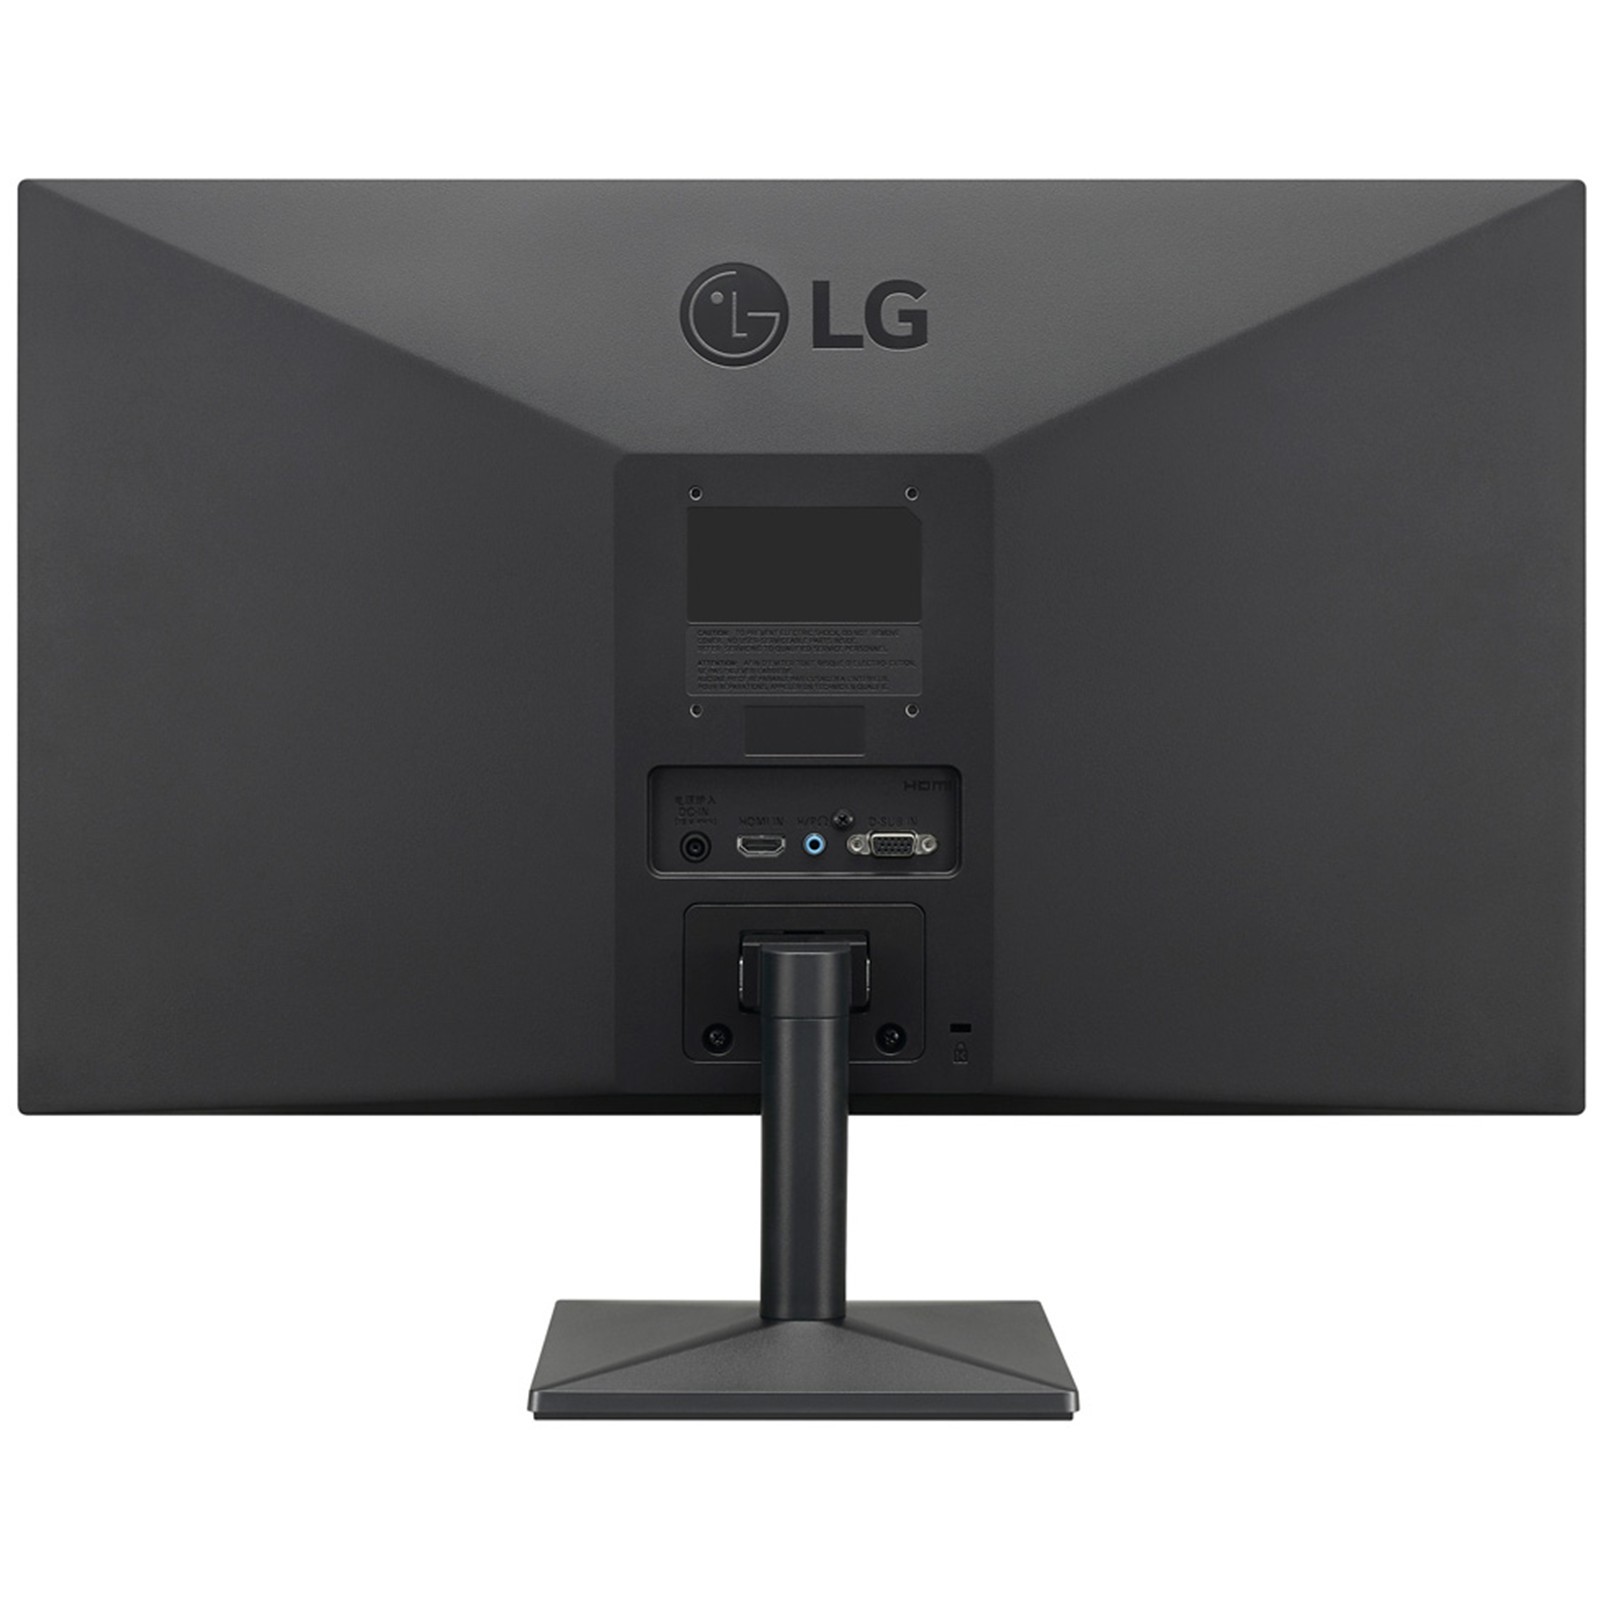 Brand New LG 24MK430HB 24" IPS LED Monitor, 1920x1080 , HDMI+VGA